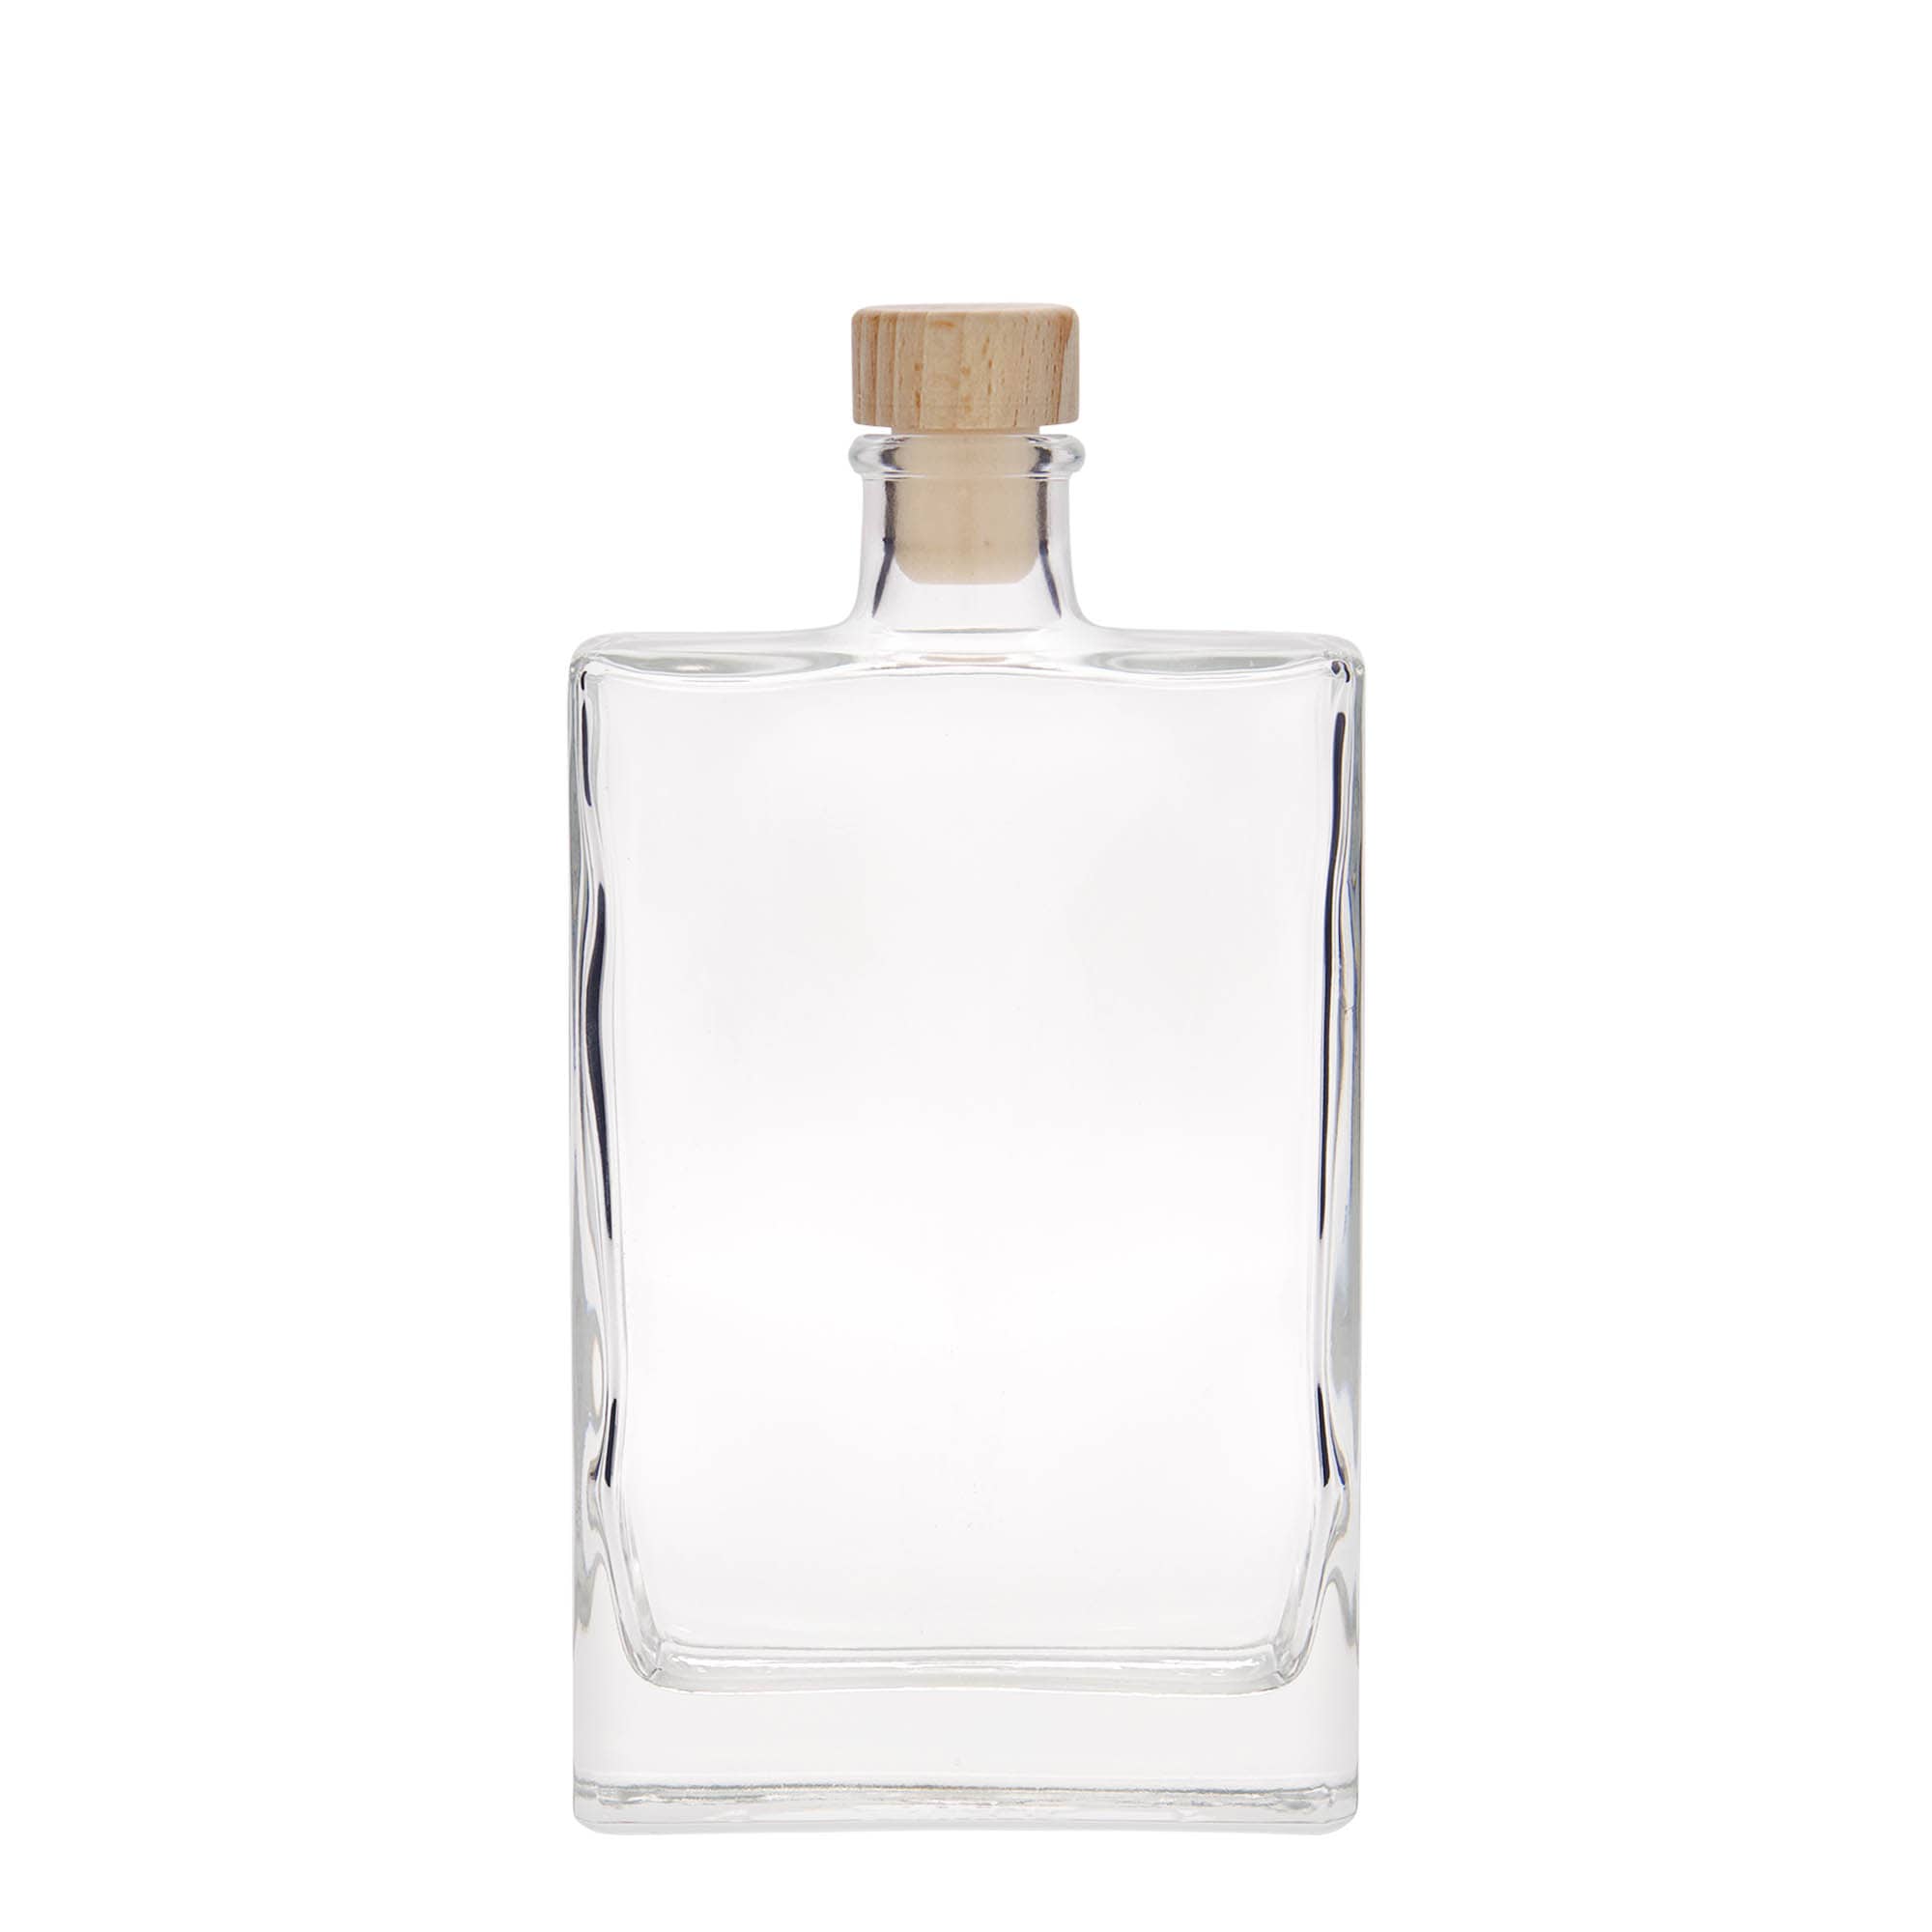 350 ml glass bottle 'Julia', rectangular, closure: cork